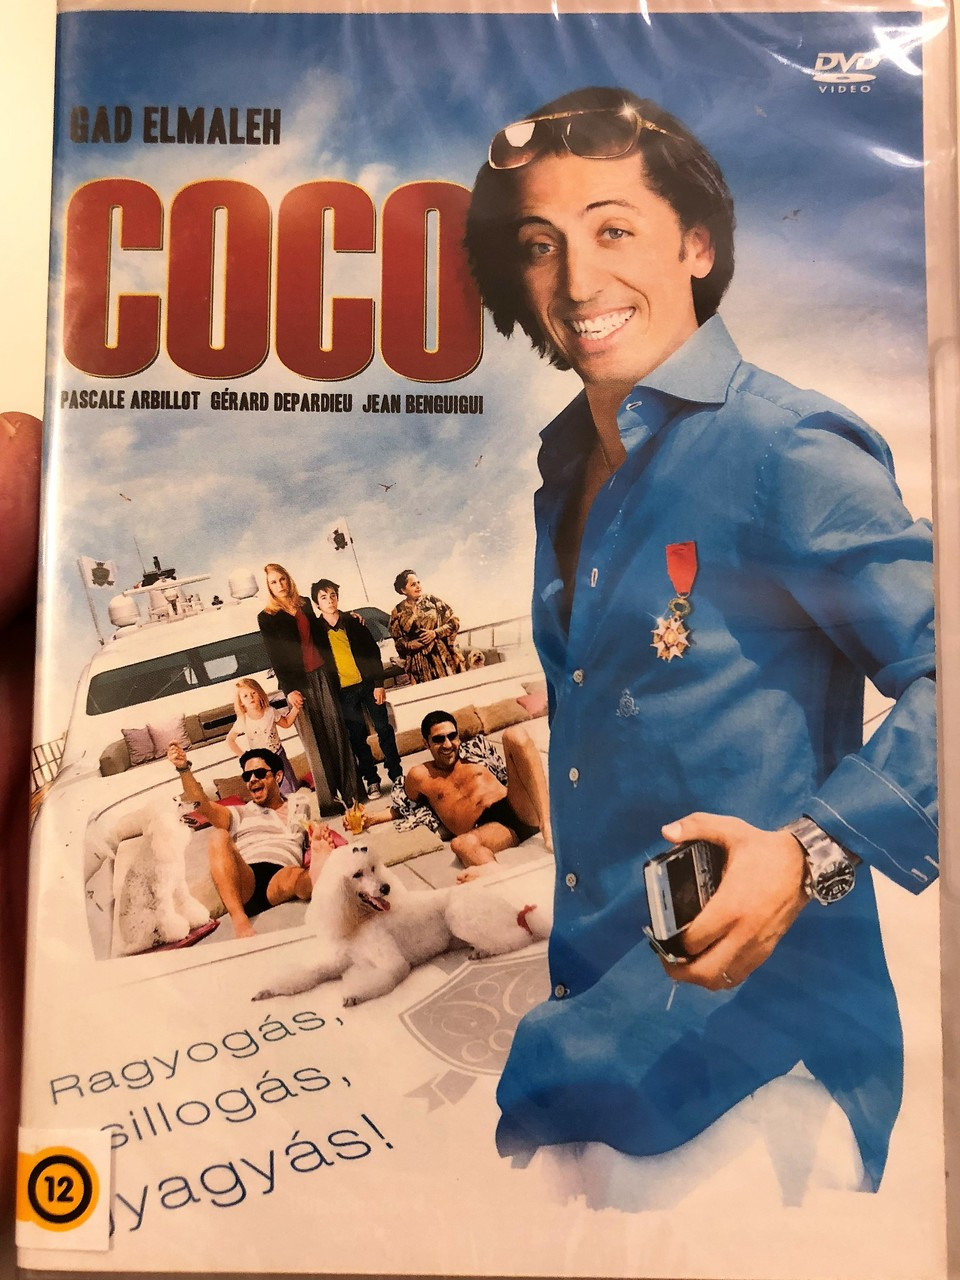 Coco DVD 2009 Region 2 PAL / Directed by Gad Elmaleh / Actors: Gad Elmaleh,  Pascale Arbillot, Jean Benguigui, Manu Payet, Ary Abittan -  bibleinmylanguage